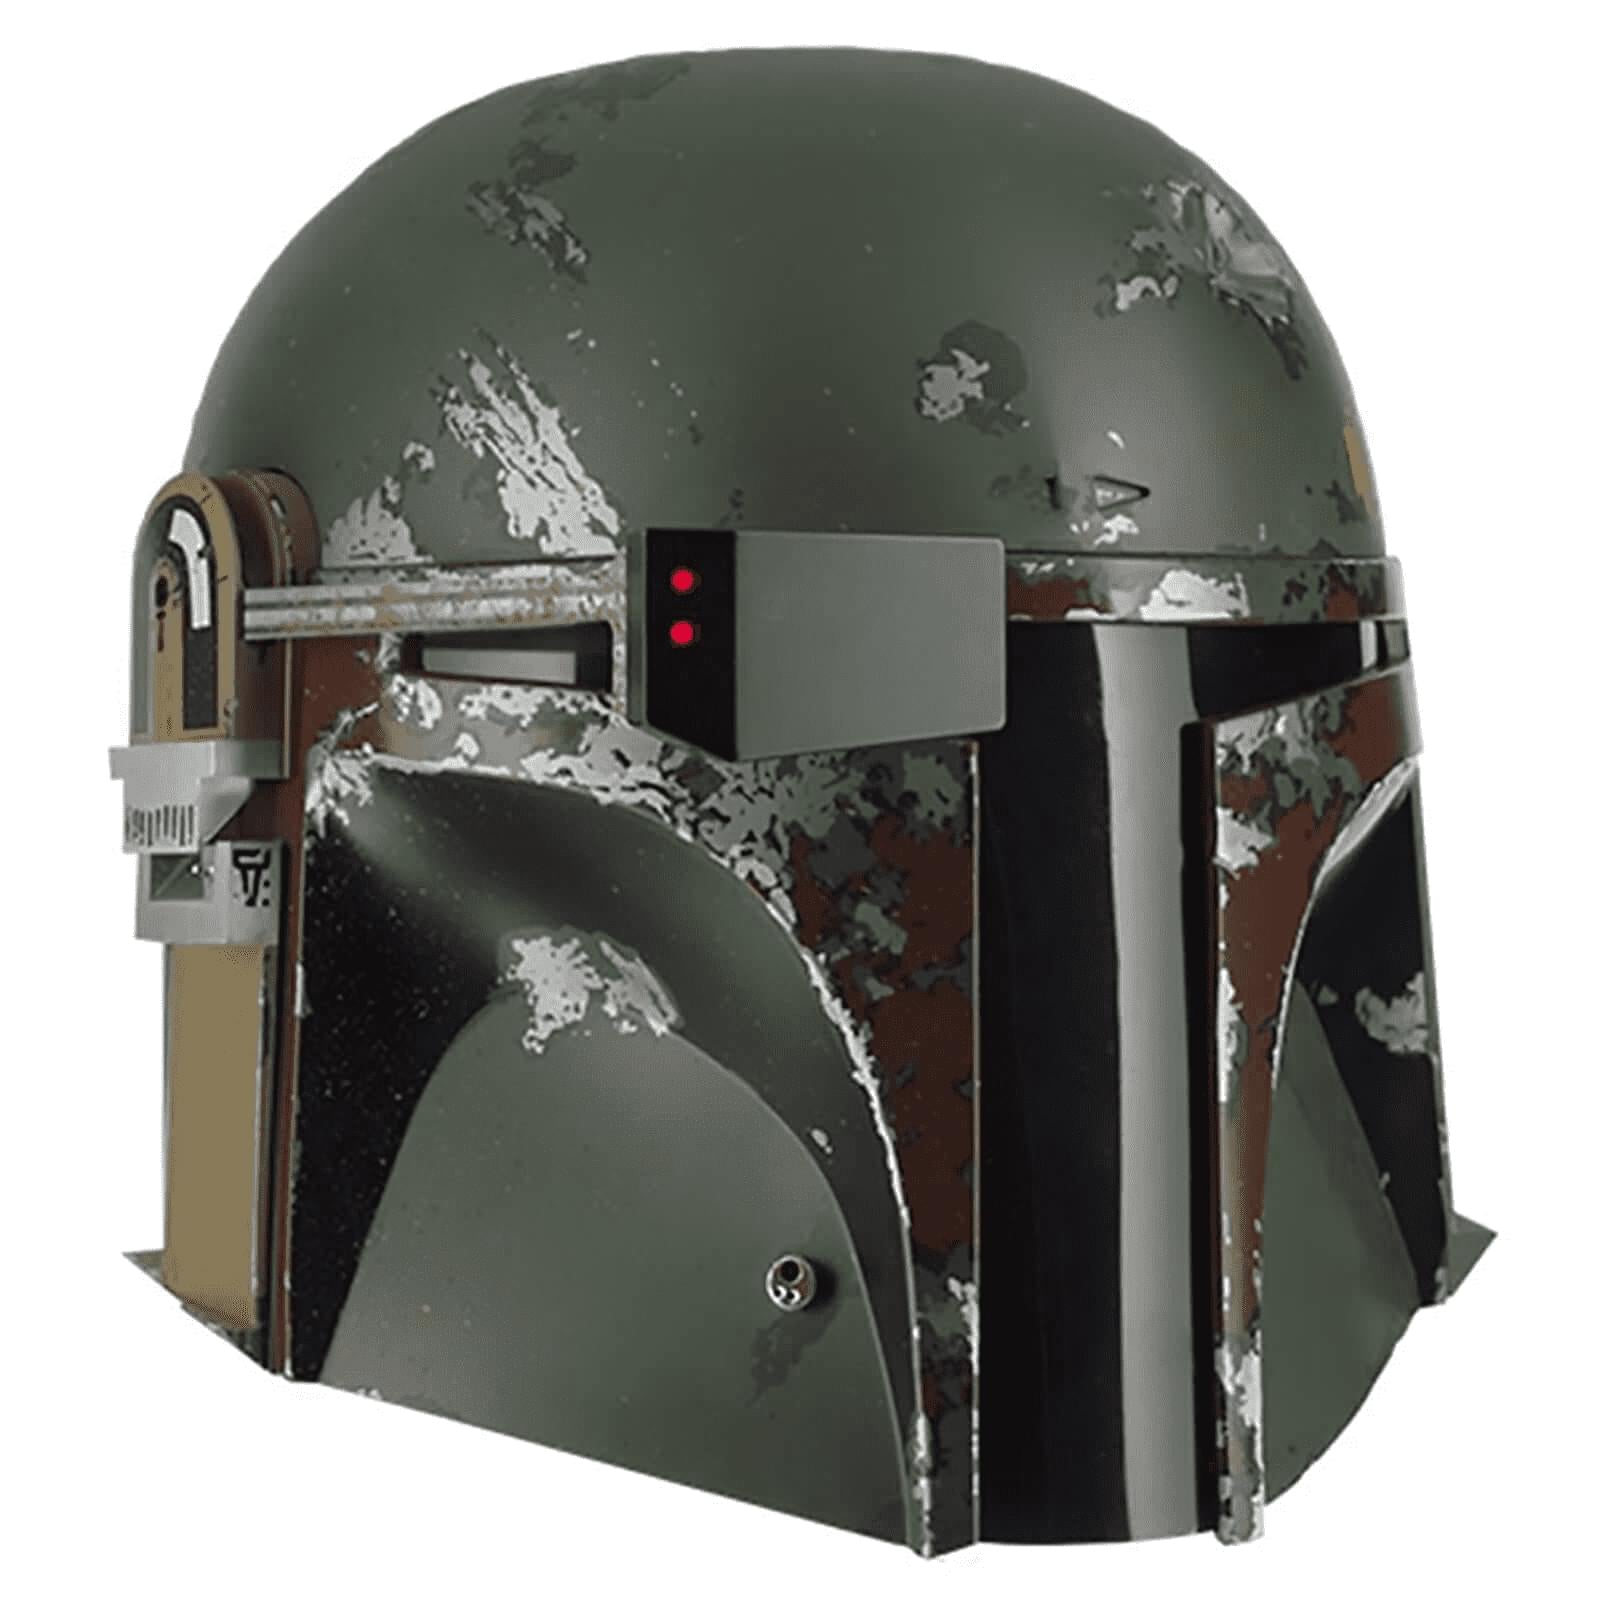 Star Wars Boba Fett 1:1 Precision Crafted Helmet Replica